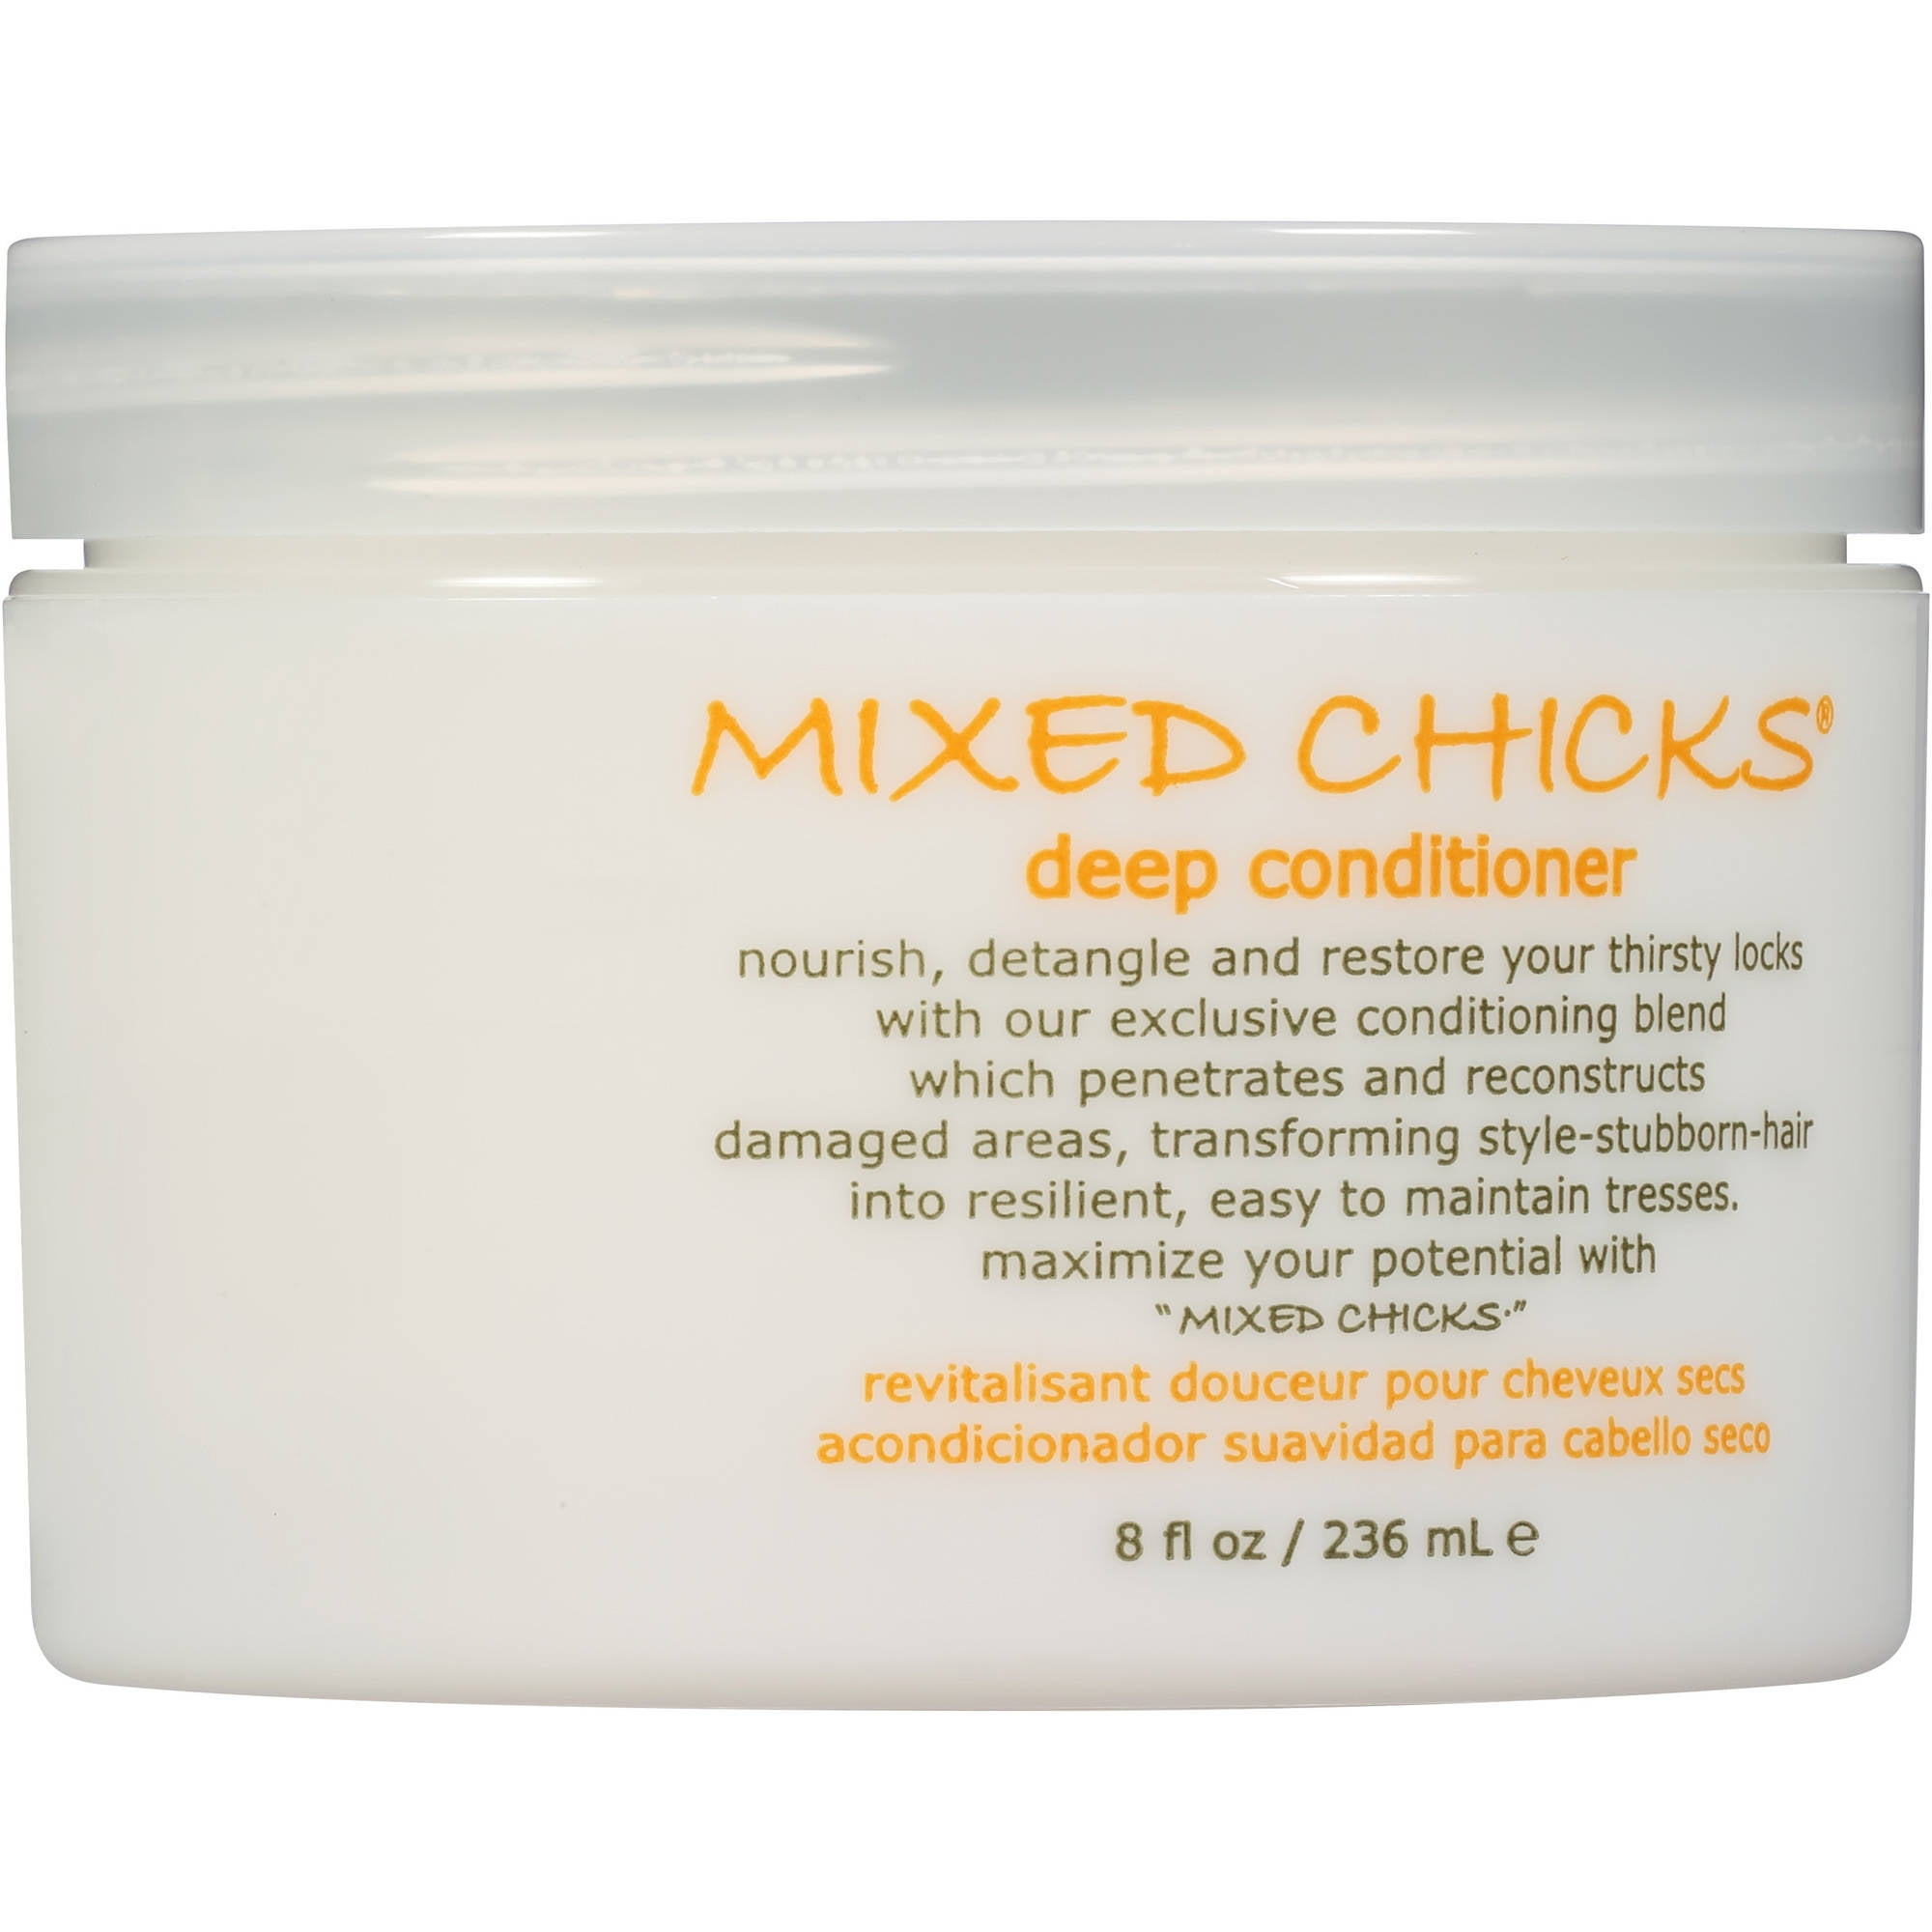 mixed chicks deep conditioner